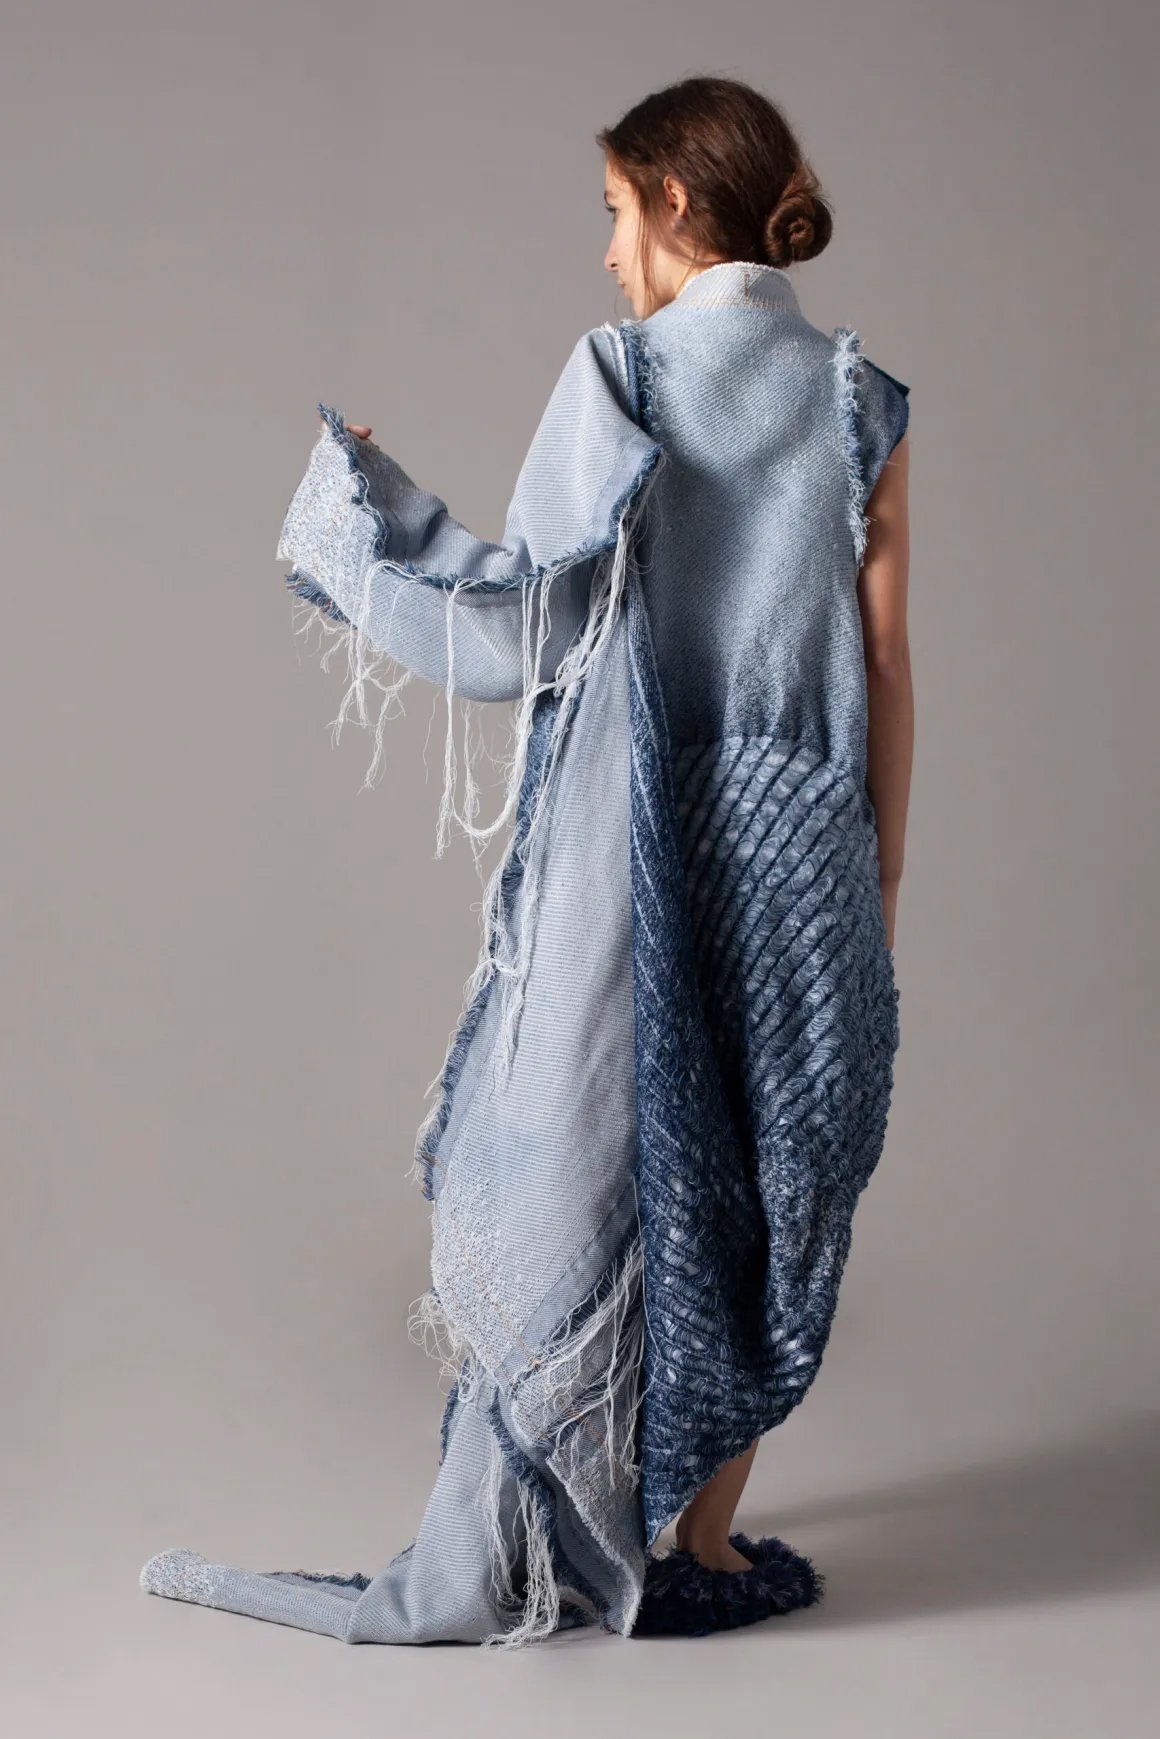 jacquard-garment-weaving-denim-kelly-konings-textile-design11-scaled.jpg